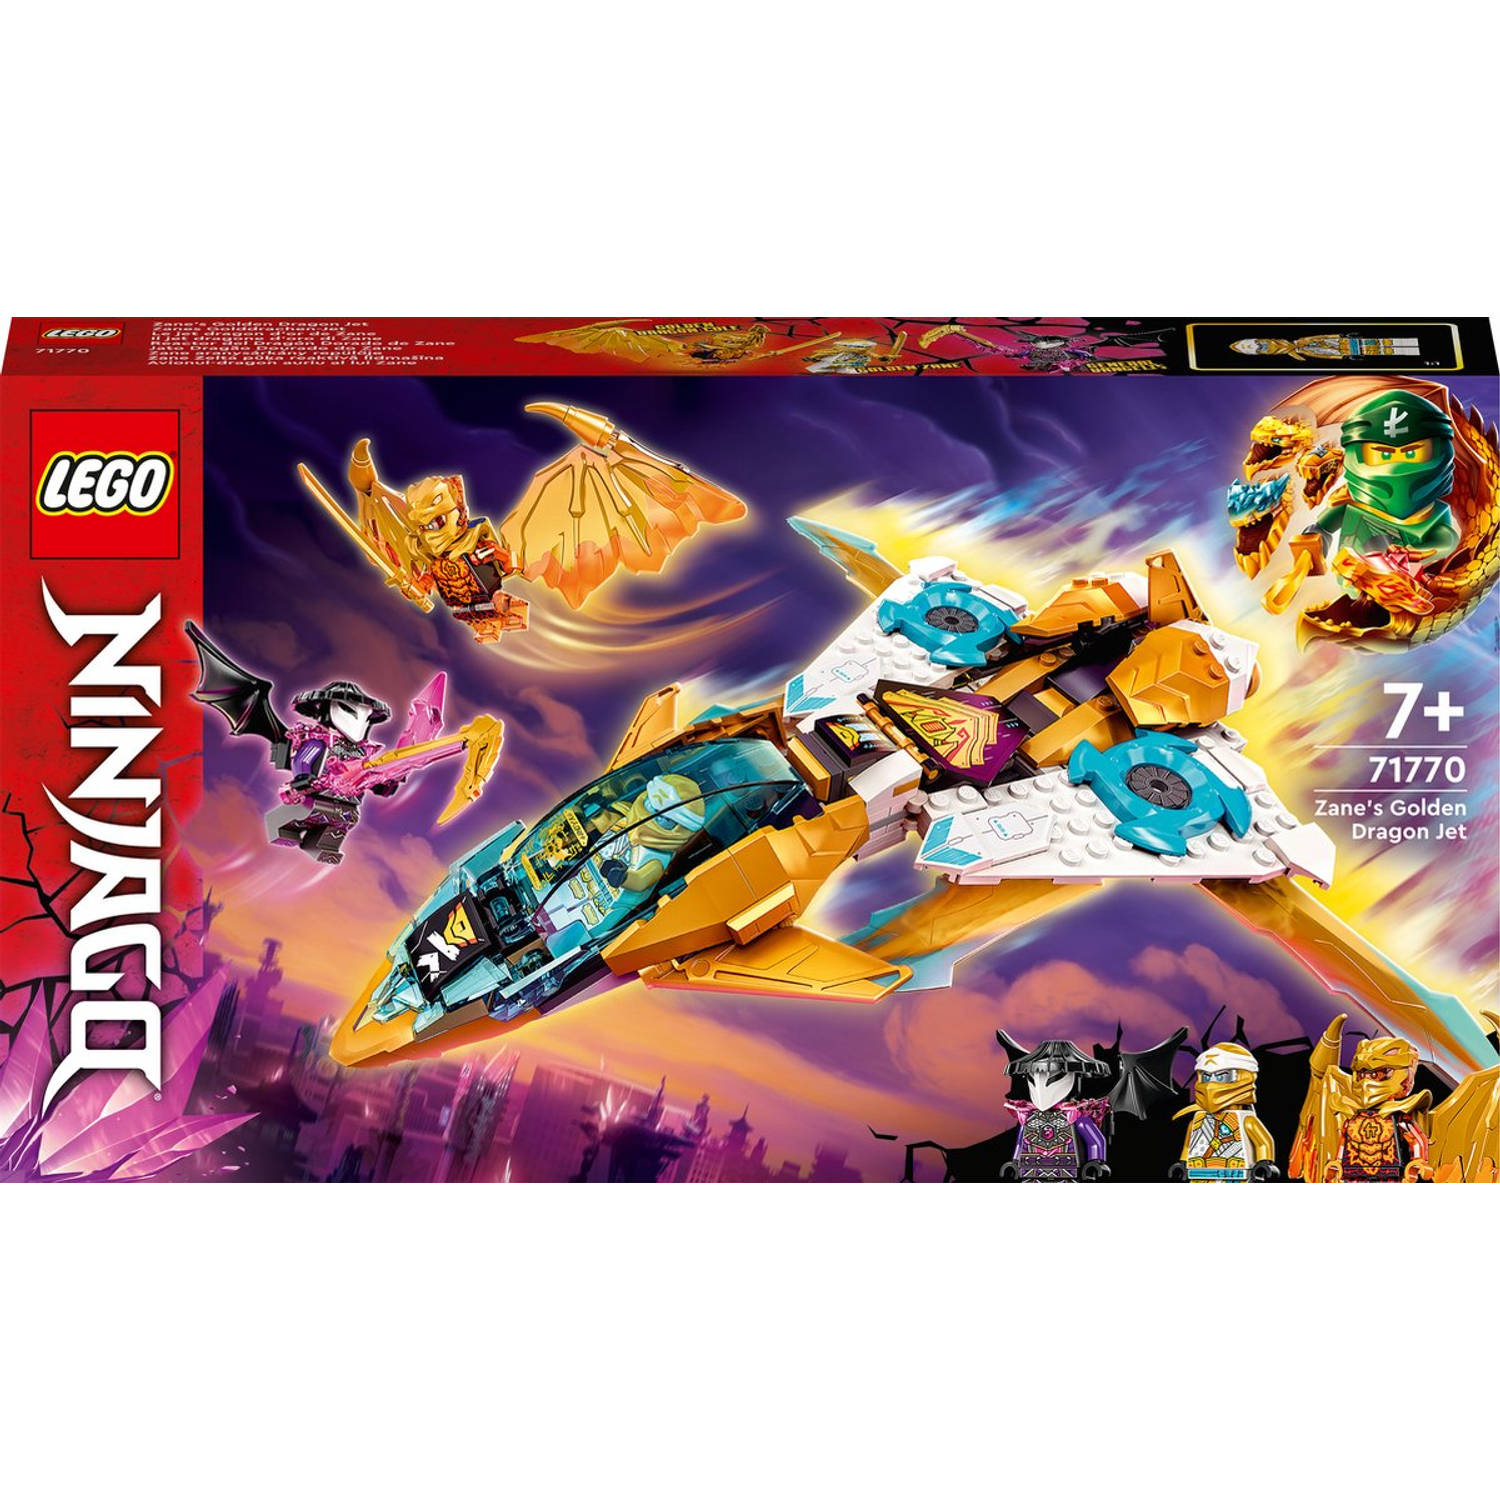 LEGOÂ® Ninjago 71770 zane s gouden drakenstraaljager